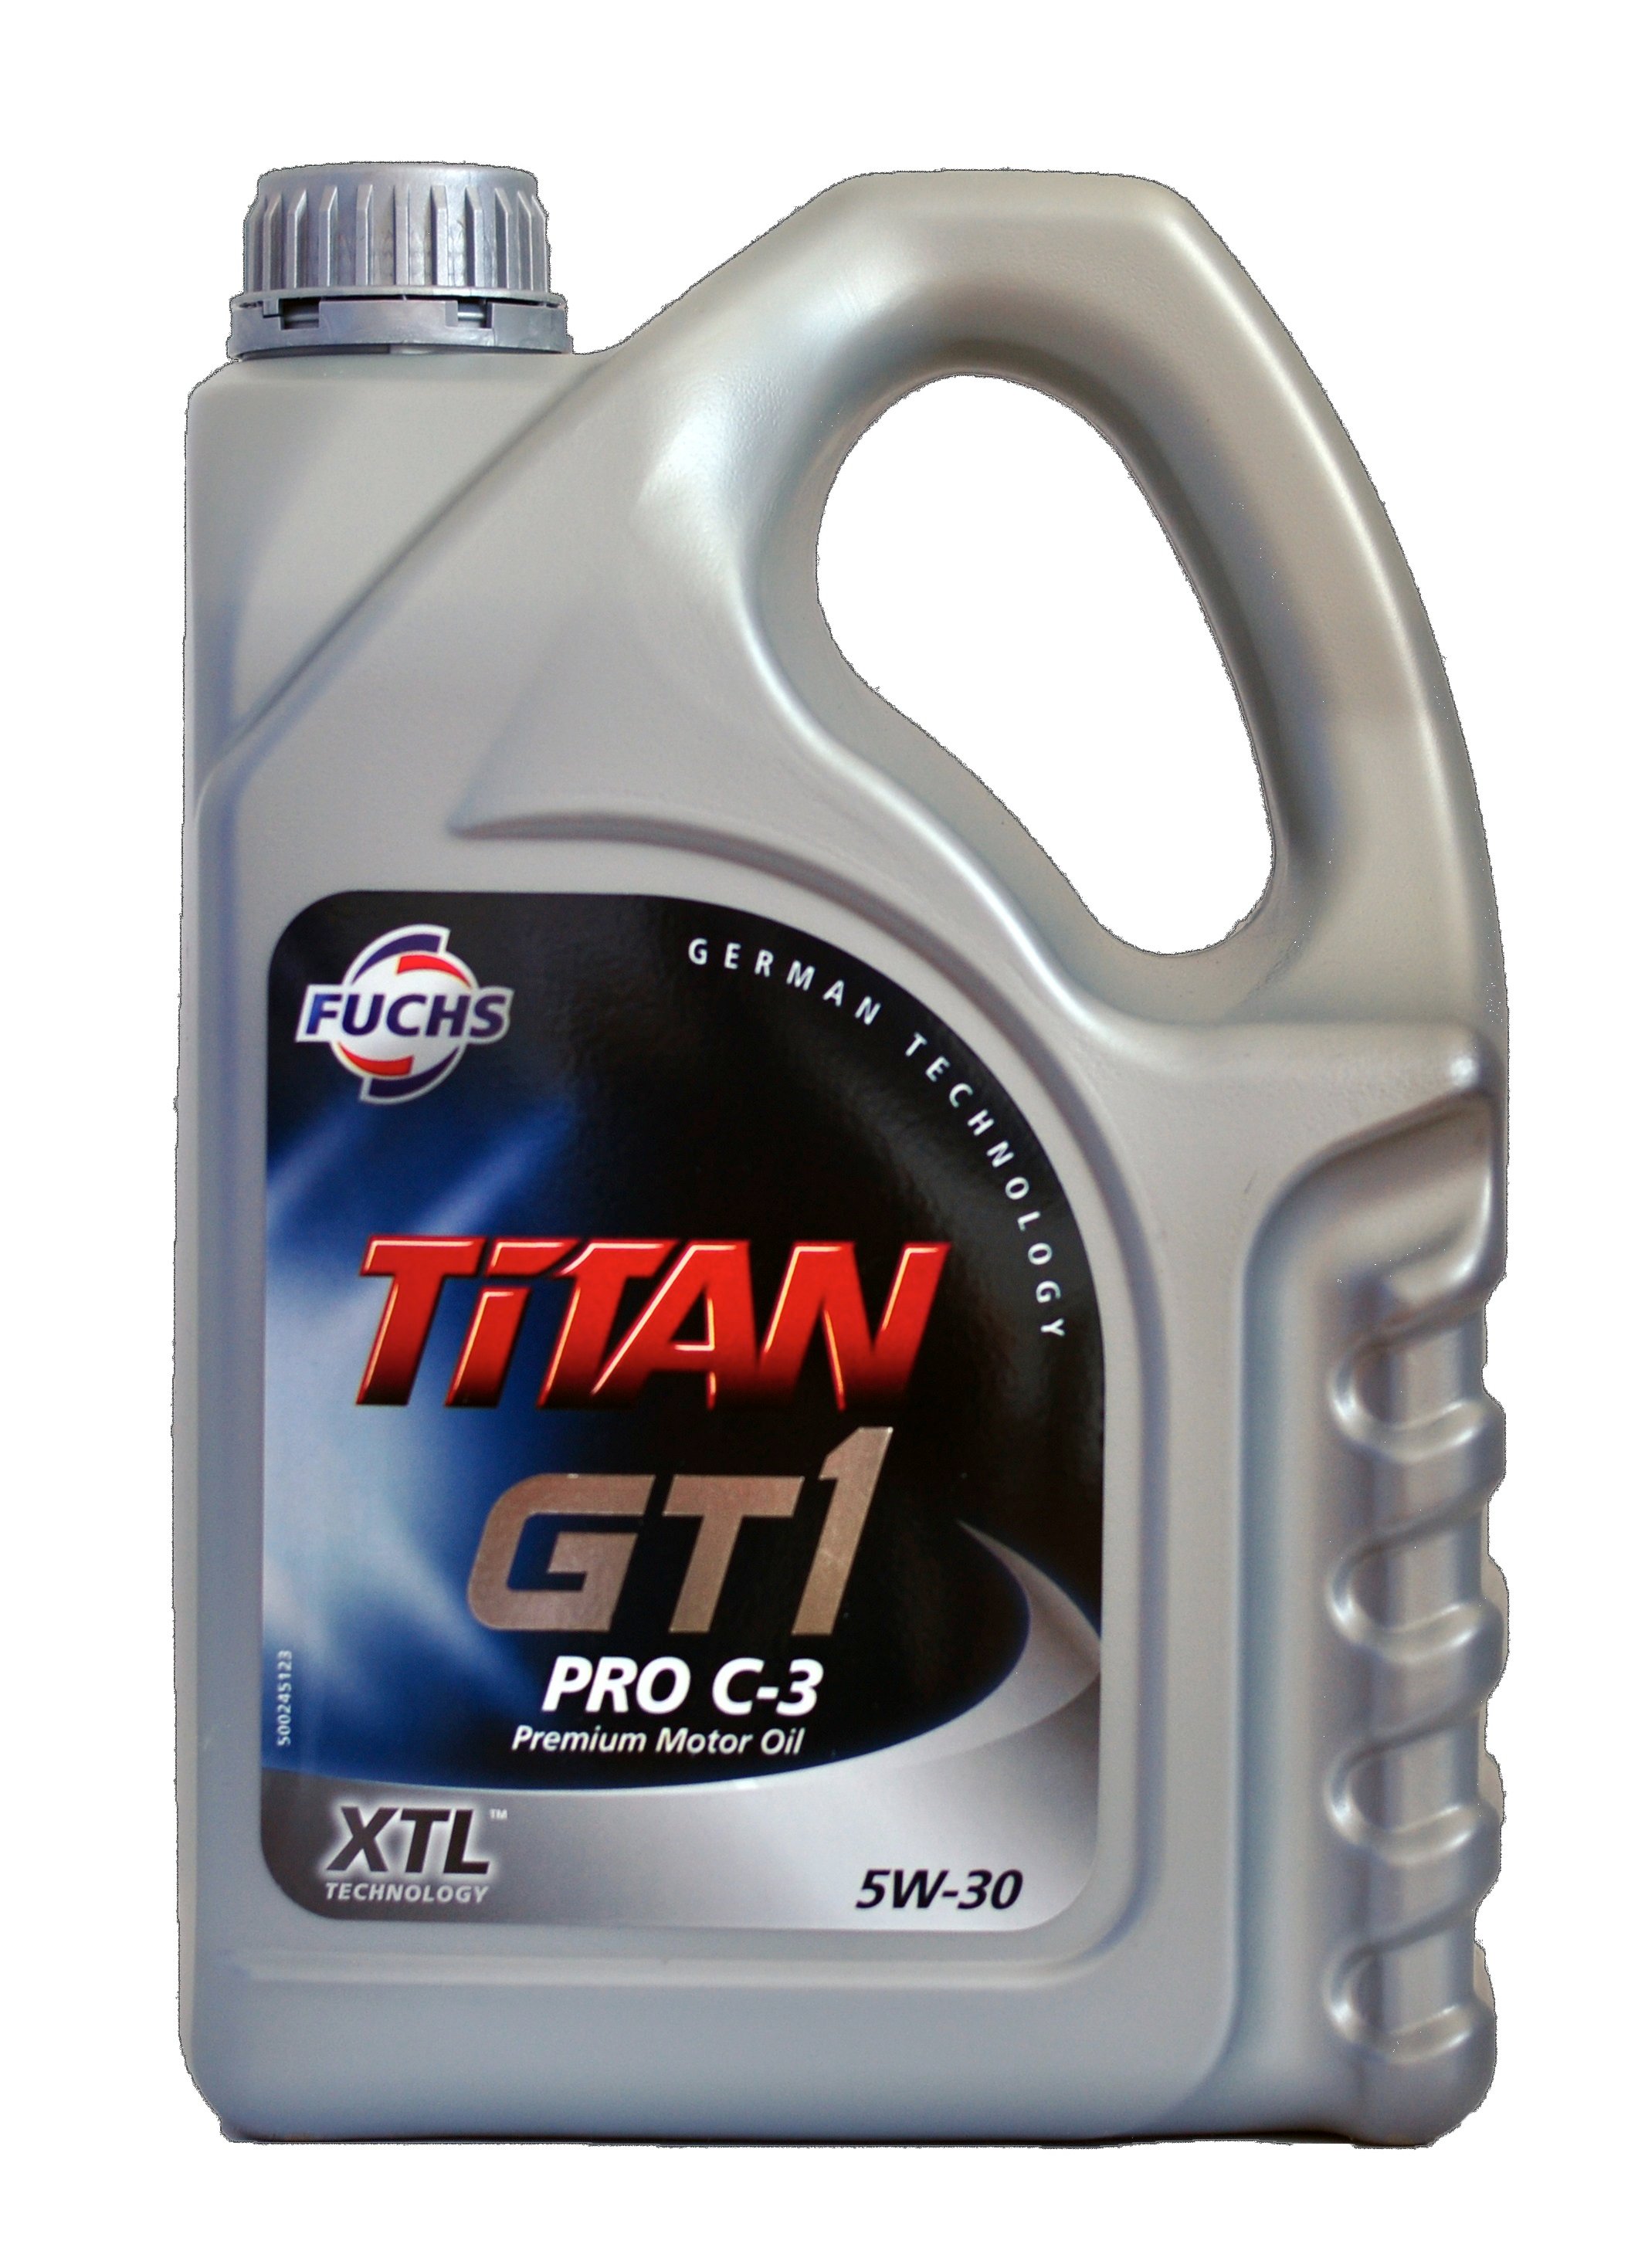 Купить титан 5w30. Fuchs Titan gt1 Flex 23 5w-30 синтетическое 4 л. Fuchs Titan gt1. Titan gt1 Pro c-3 SAE 5w-30. Масло Фукс Титан 5w30.